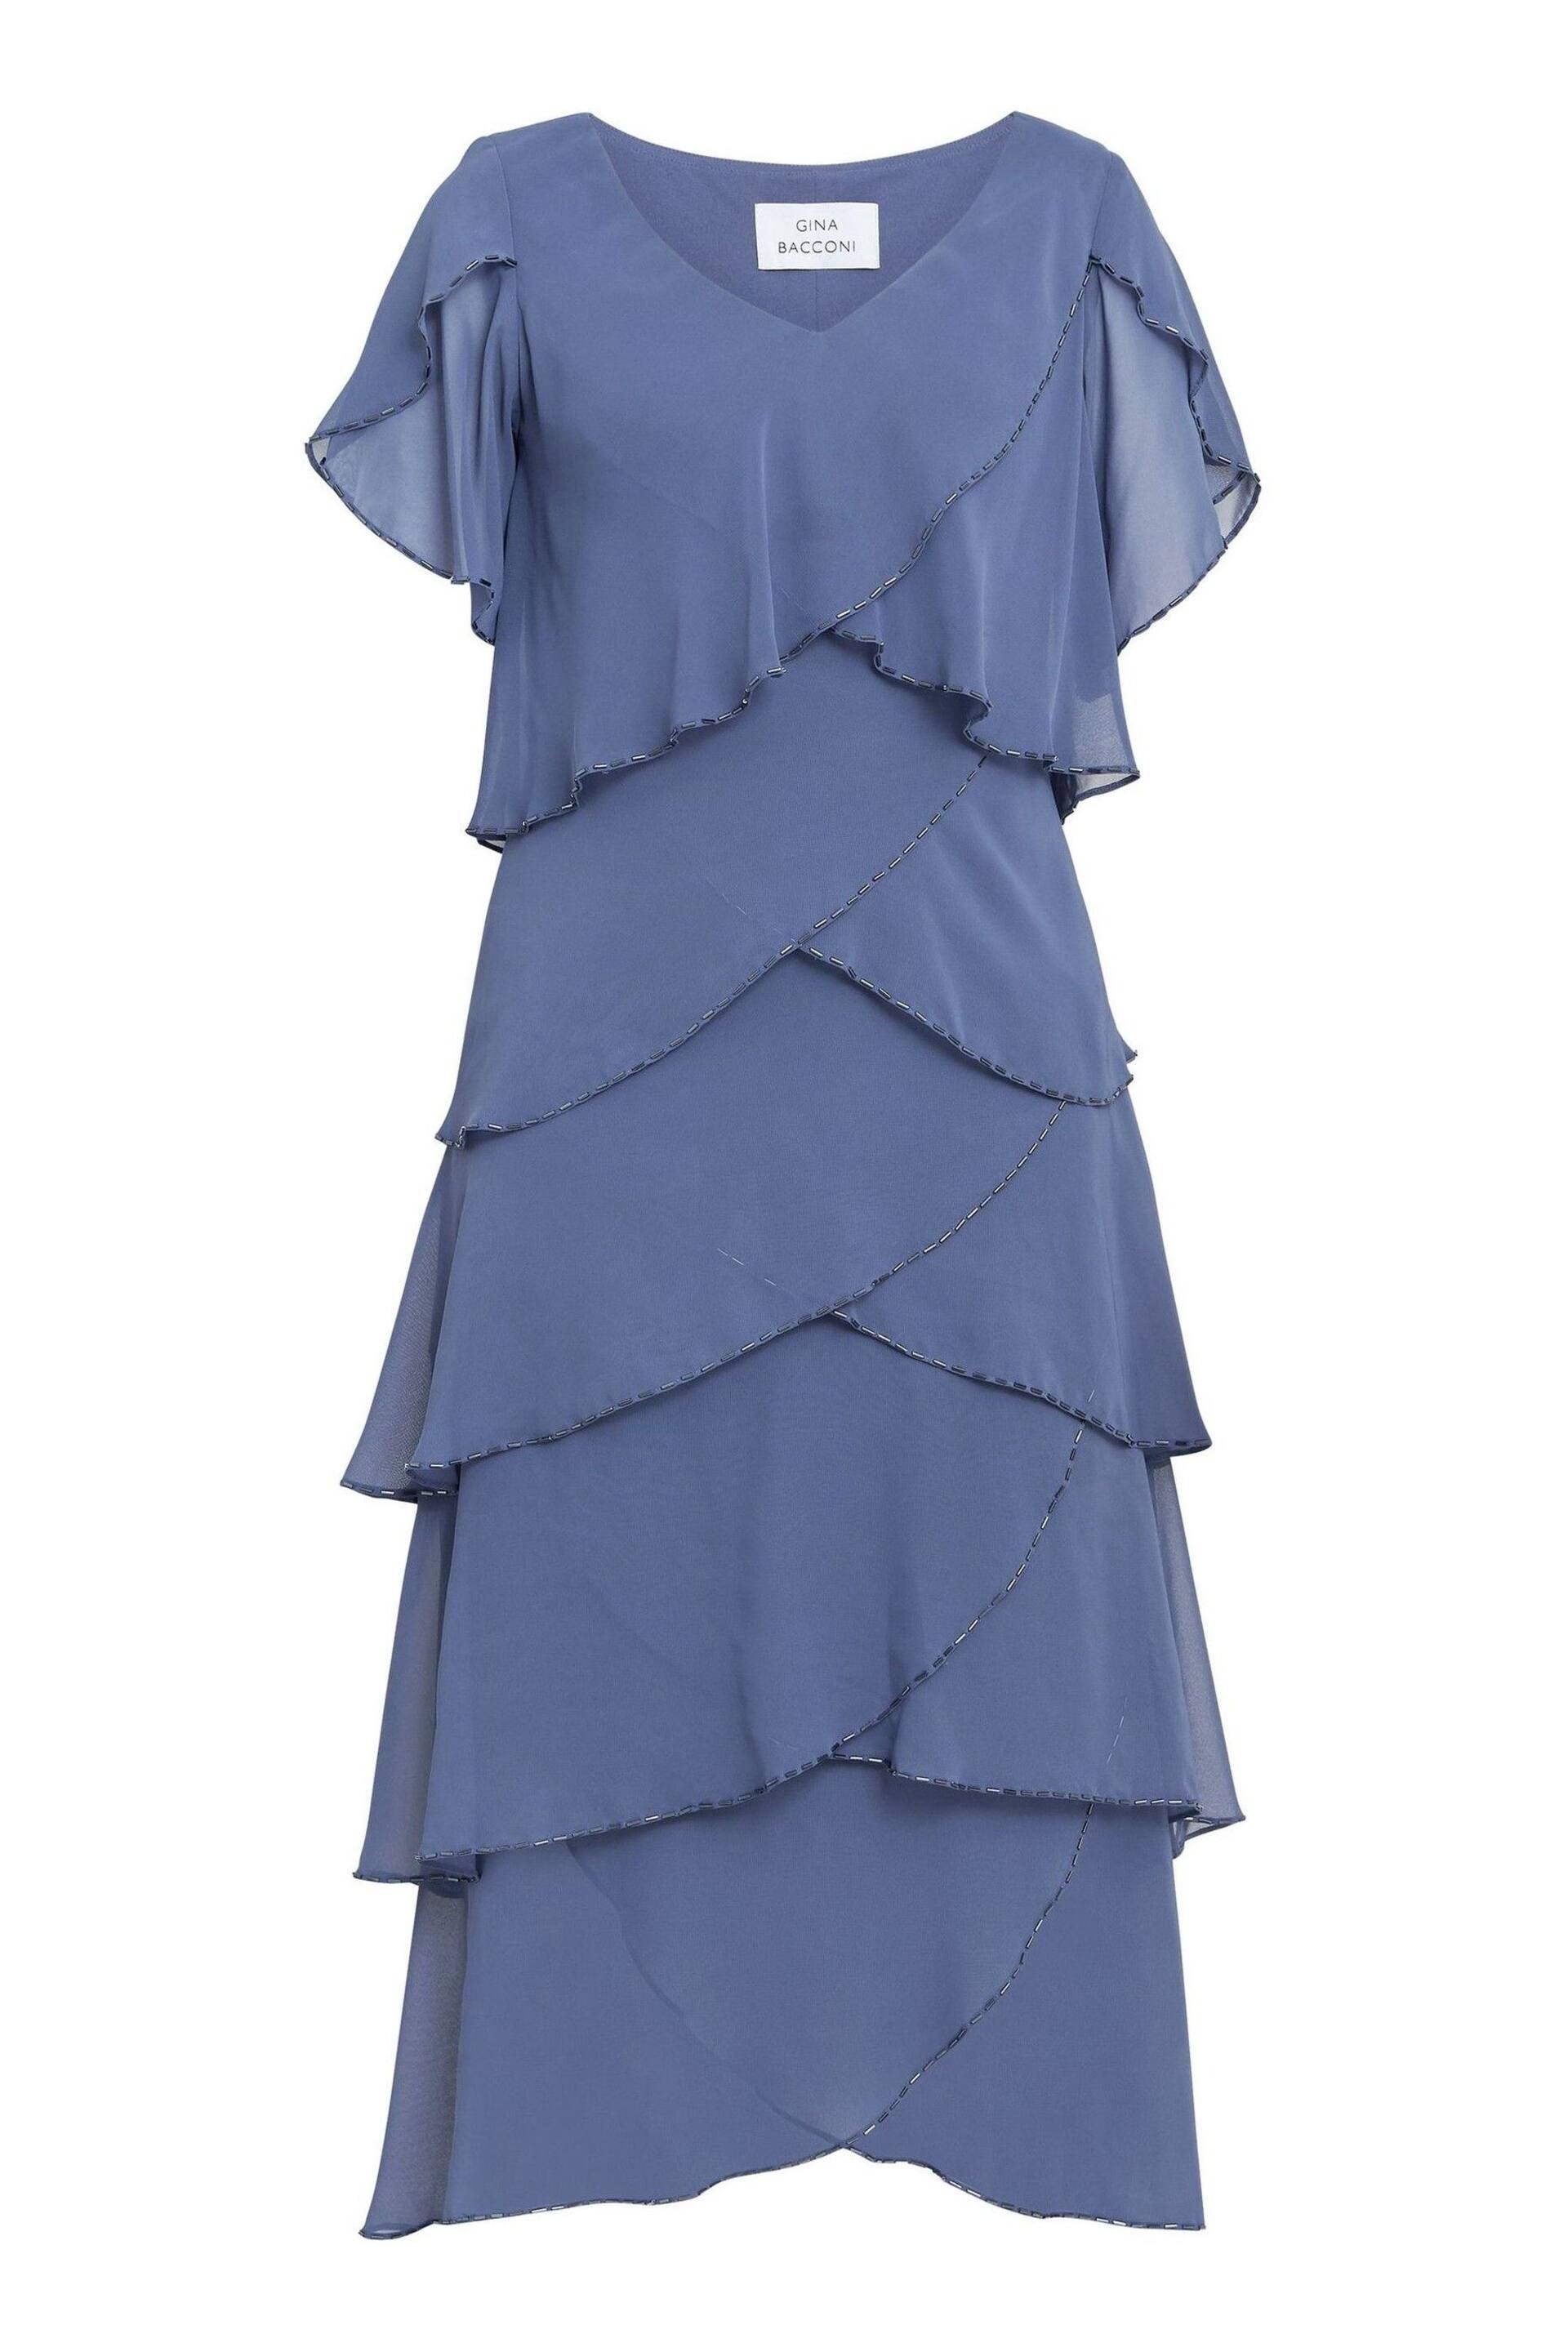 Gina Bacconi Blue Fleur Midi V-Neck Tier Dress With Bugle Beads - Image 5 of 5